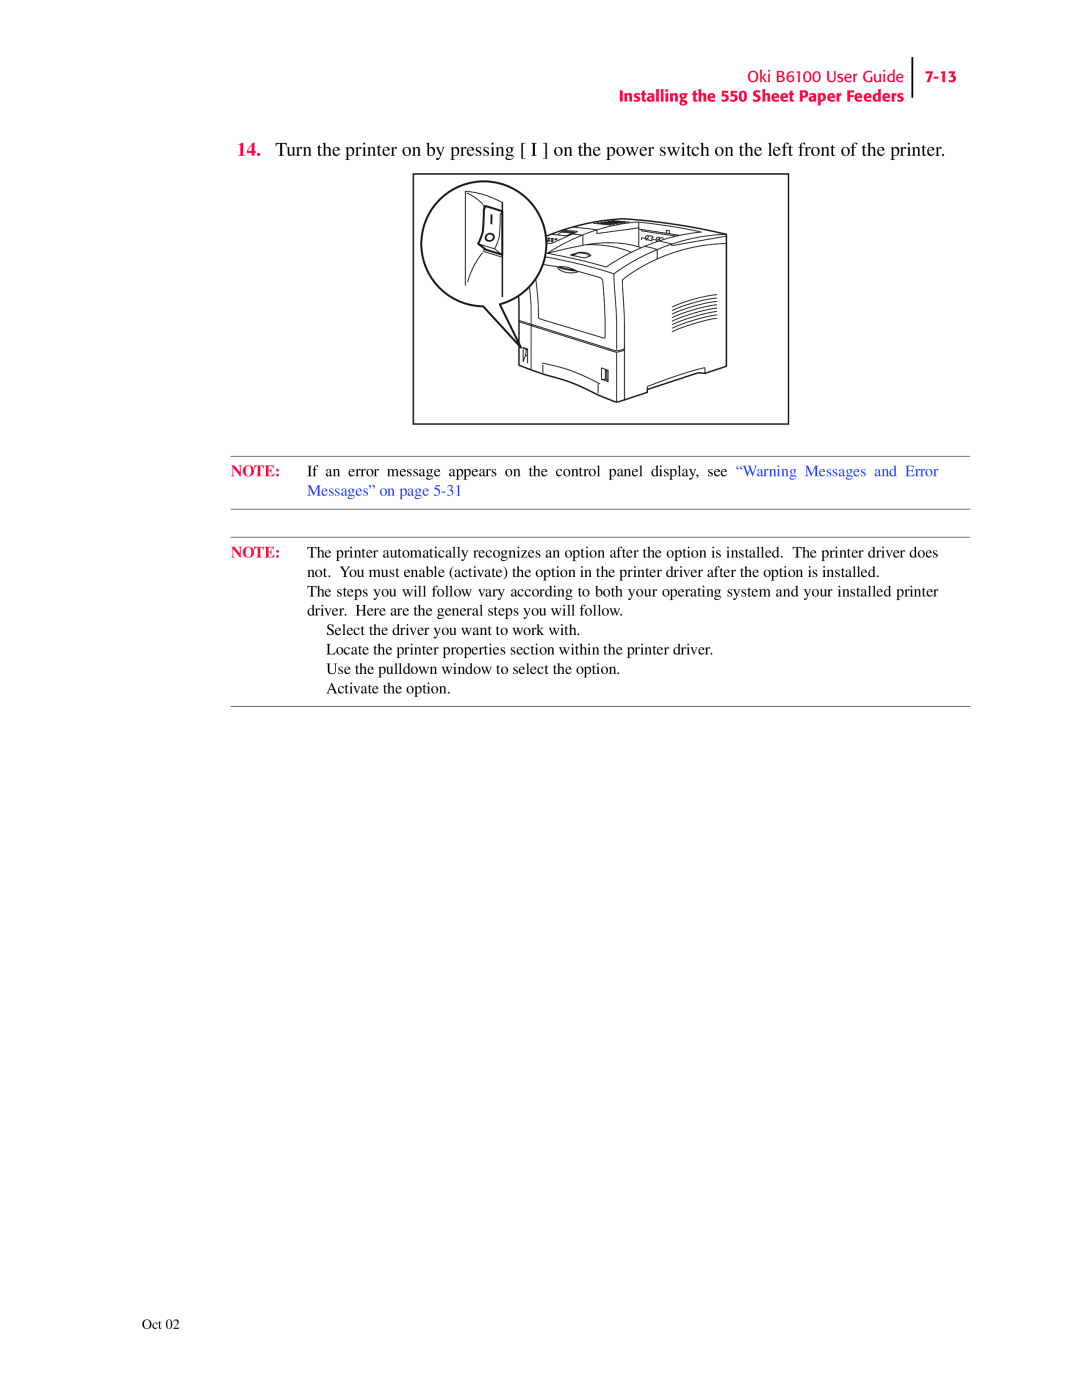 Oki manual Oki B6100 User Guide Installing the 550 Sheet Paper Feeders, 7-13 